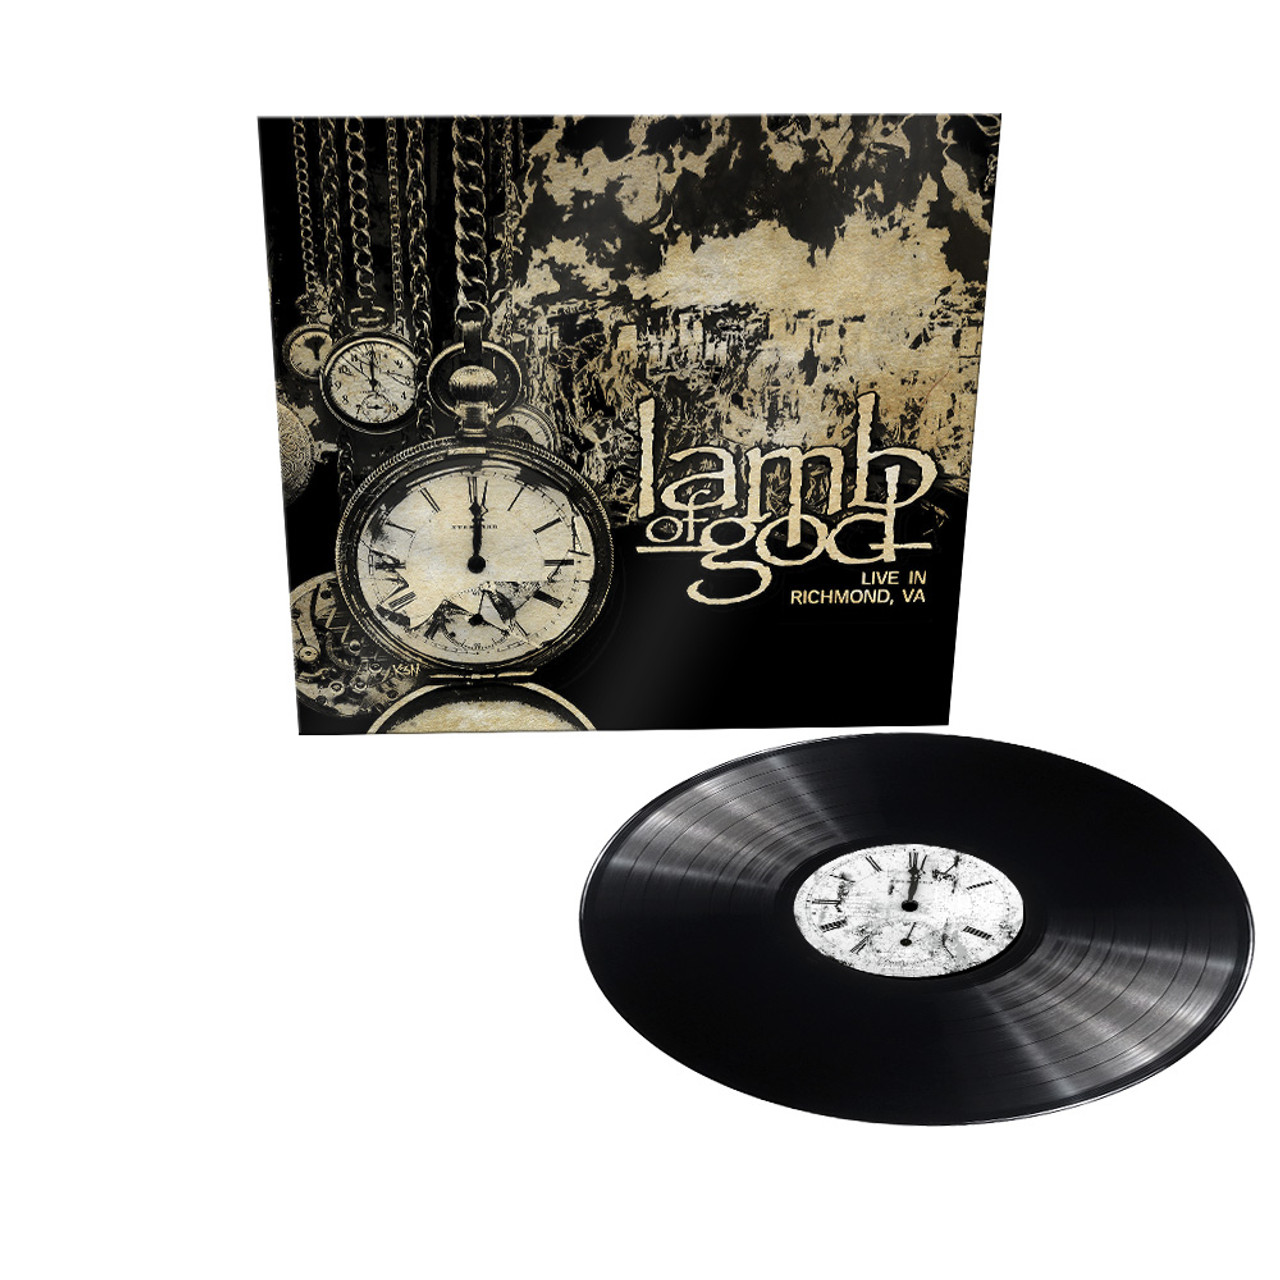 Lamb of God 'Lamb of God Live in Richmond, VA' LP Black Vinyl Limited Edition